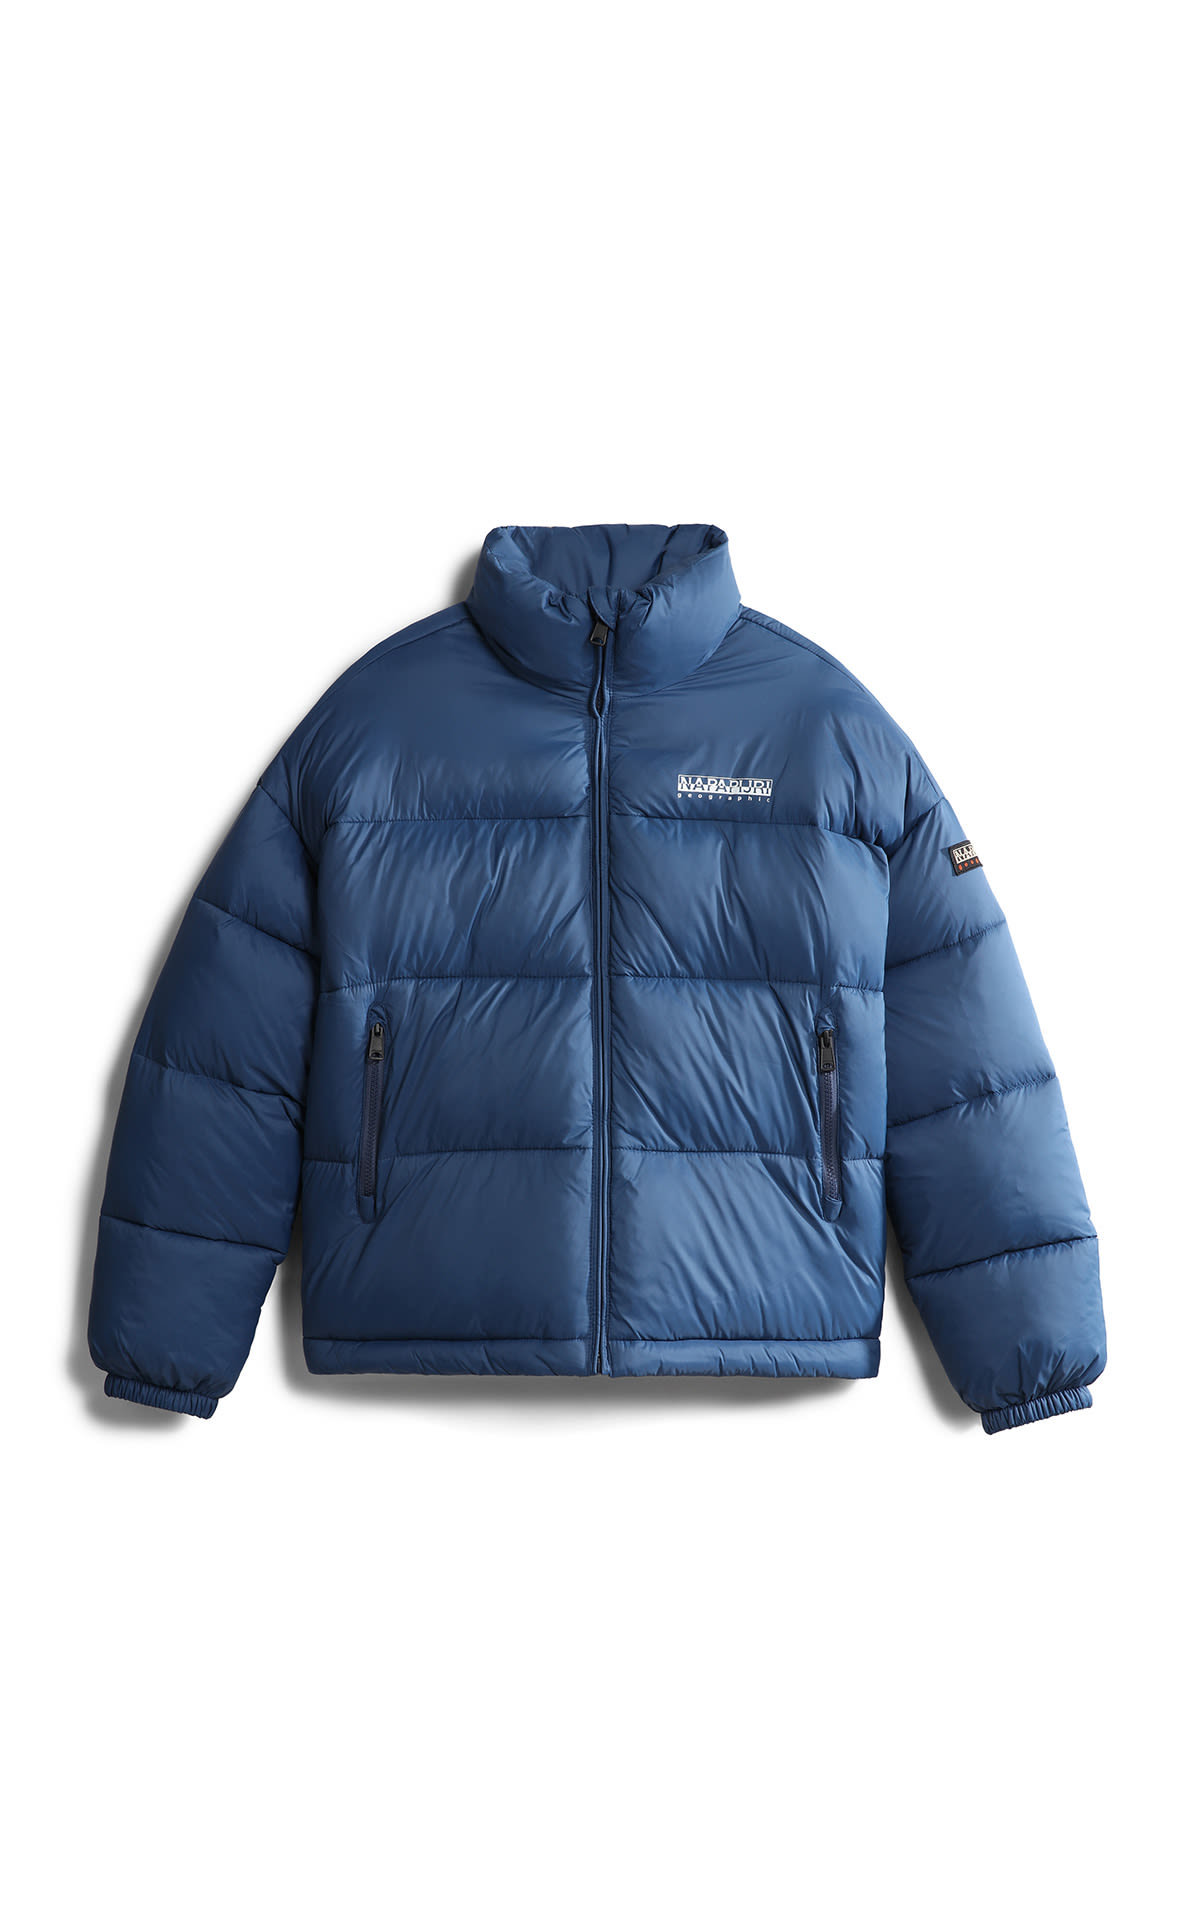 Napapijri A-BOX W 2 blue jacket